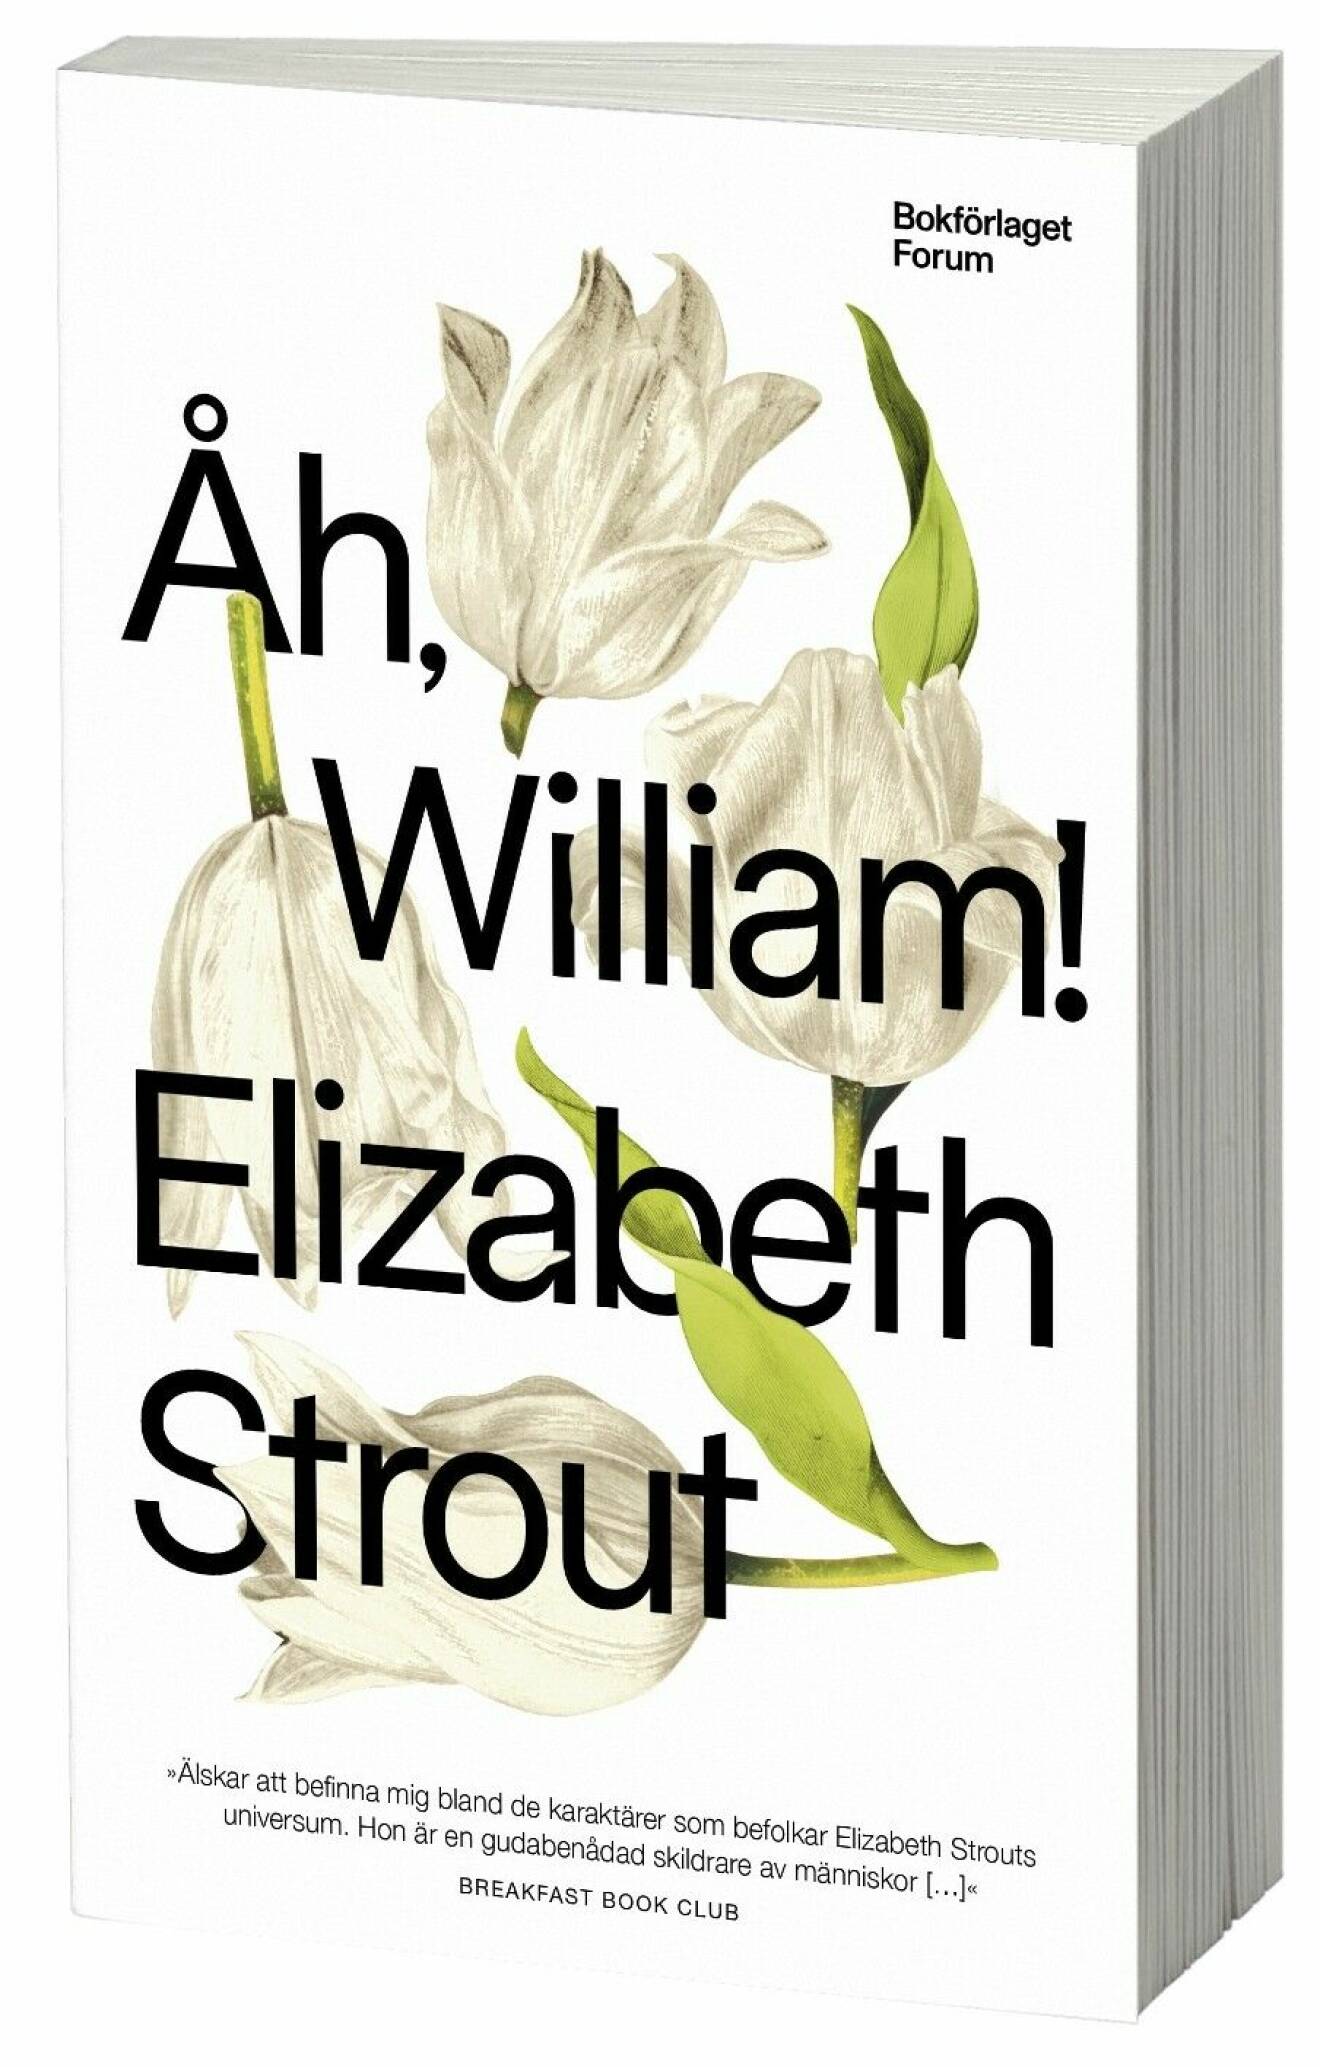 Åh, William! av Elizabeth Strout (Forum).